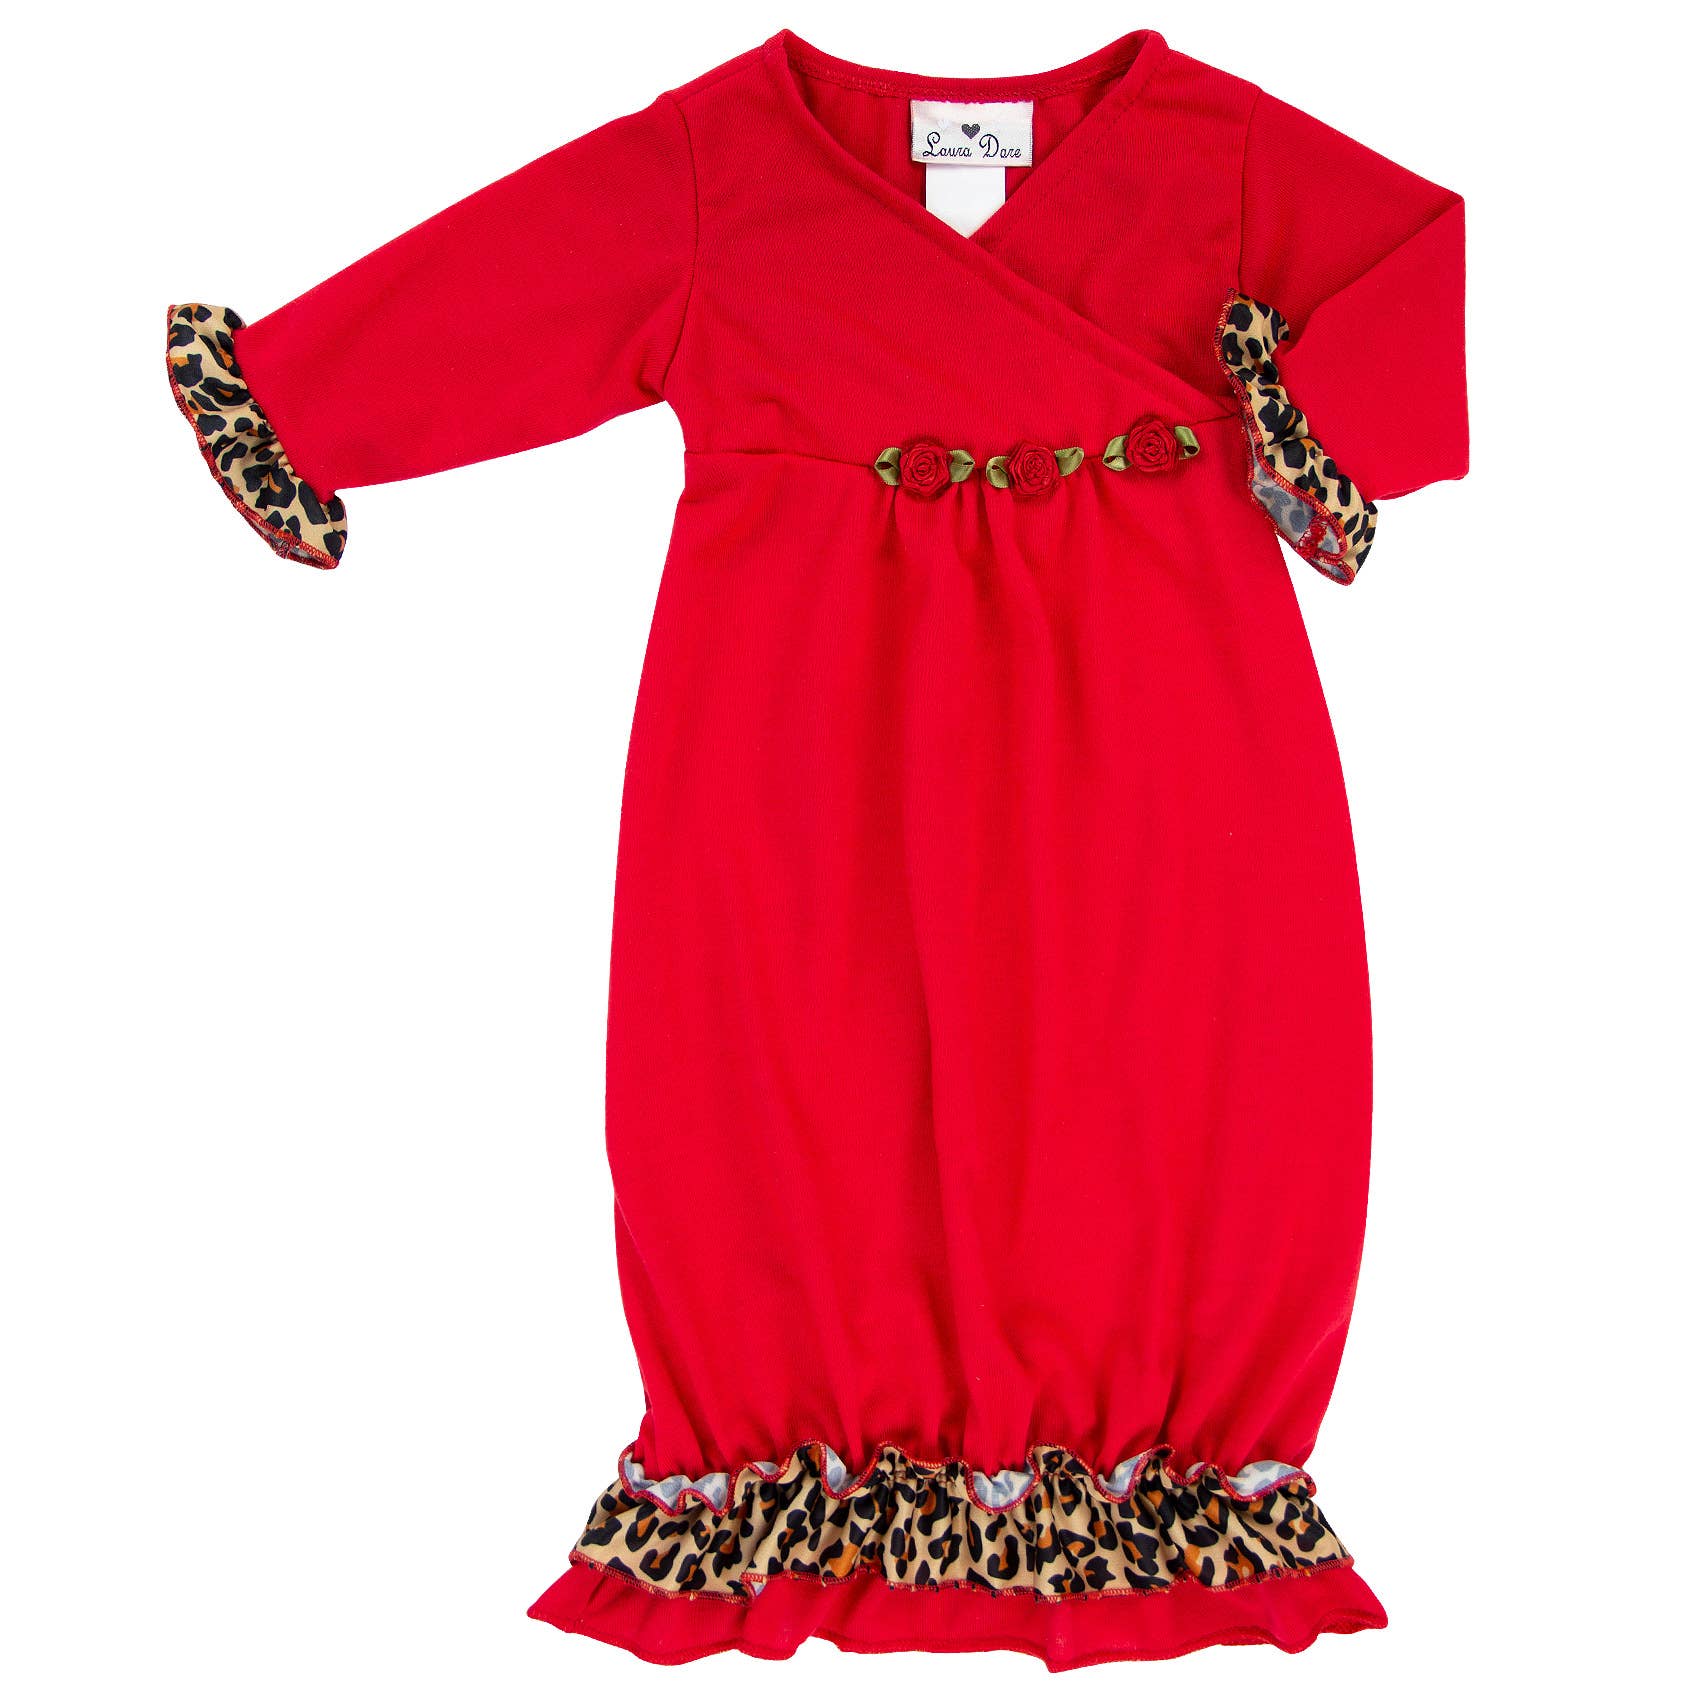 Details about   LAURA DARE Newborn 3 6 9 Month Choice Pajama Sleepwear or Halloween NWT 